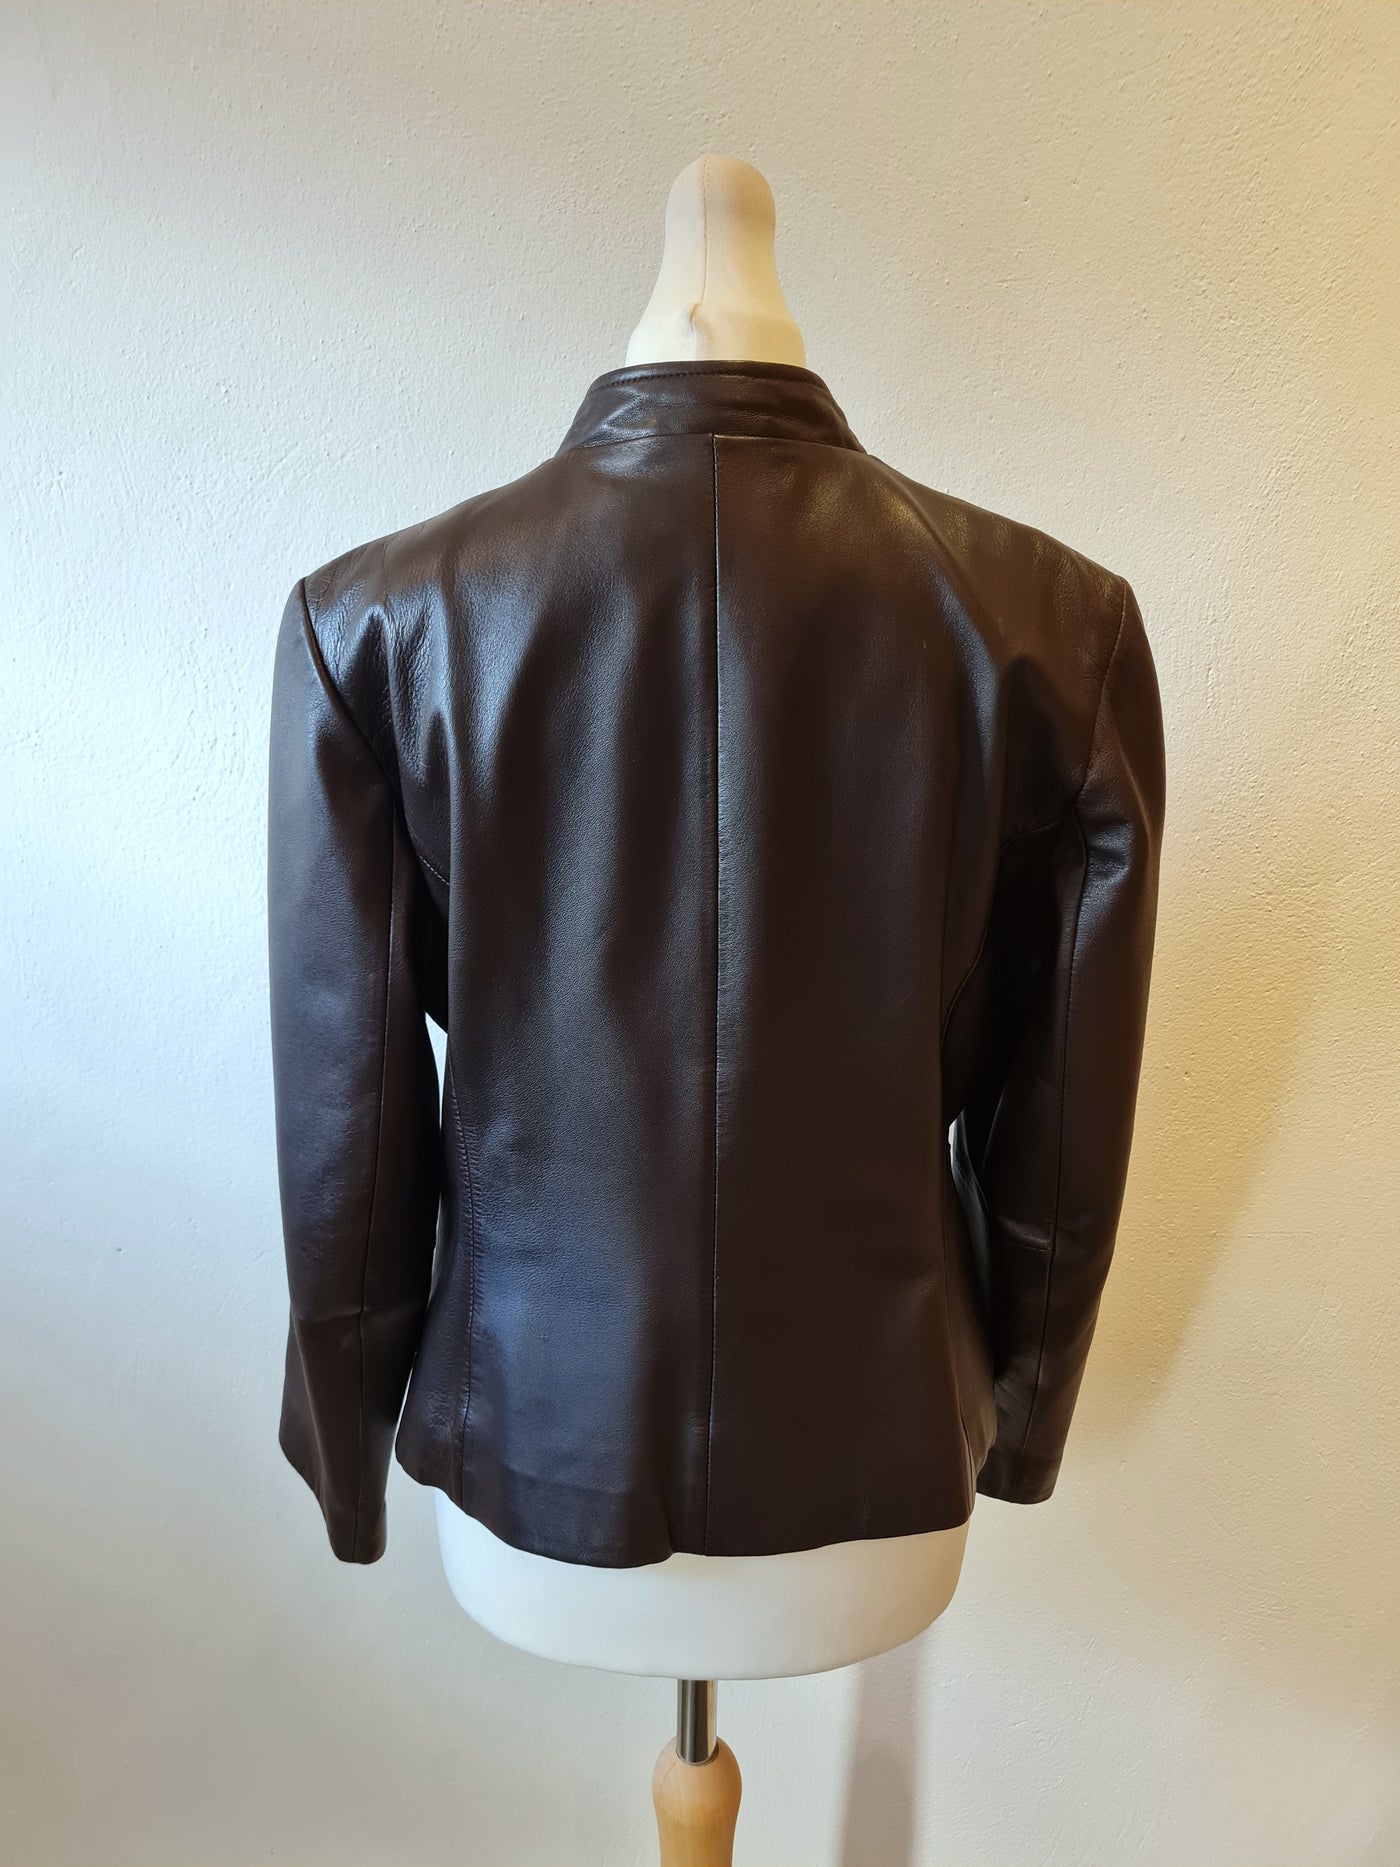 Precis Petite Brown leather jacket S